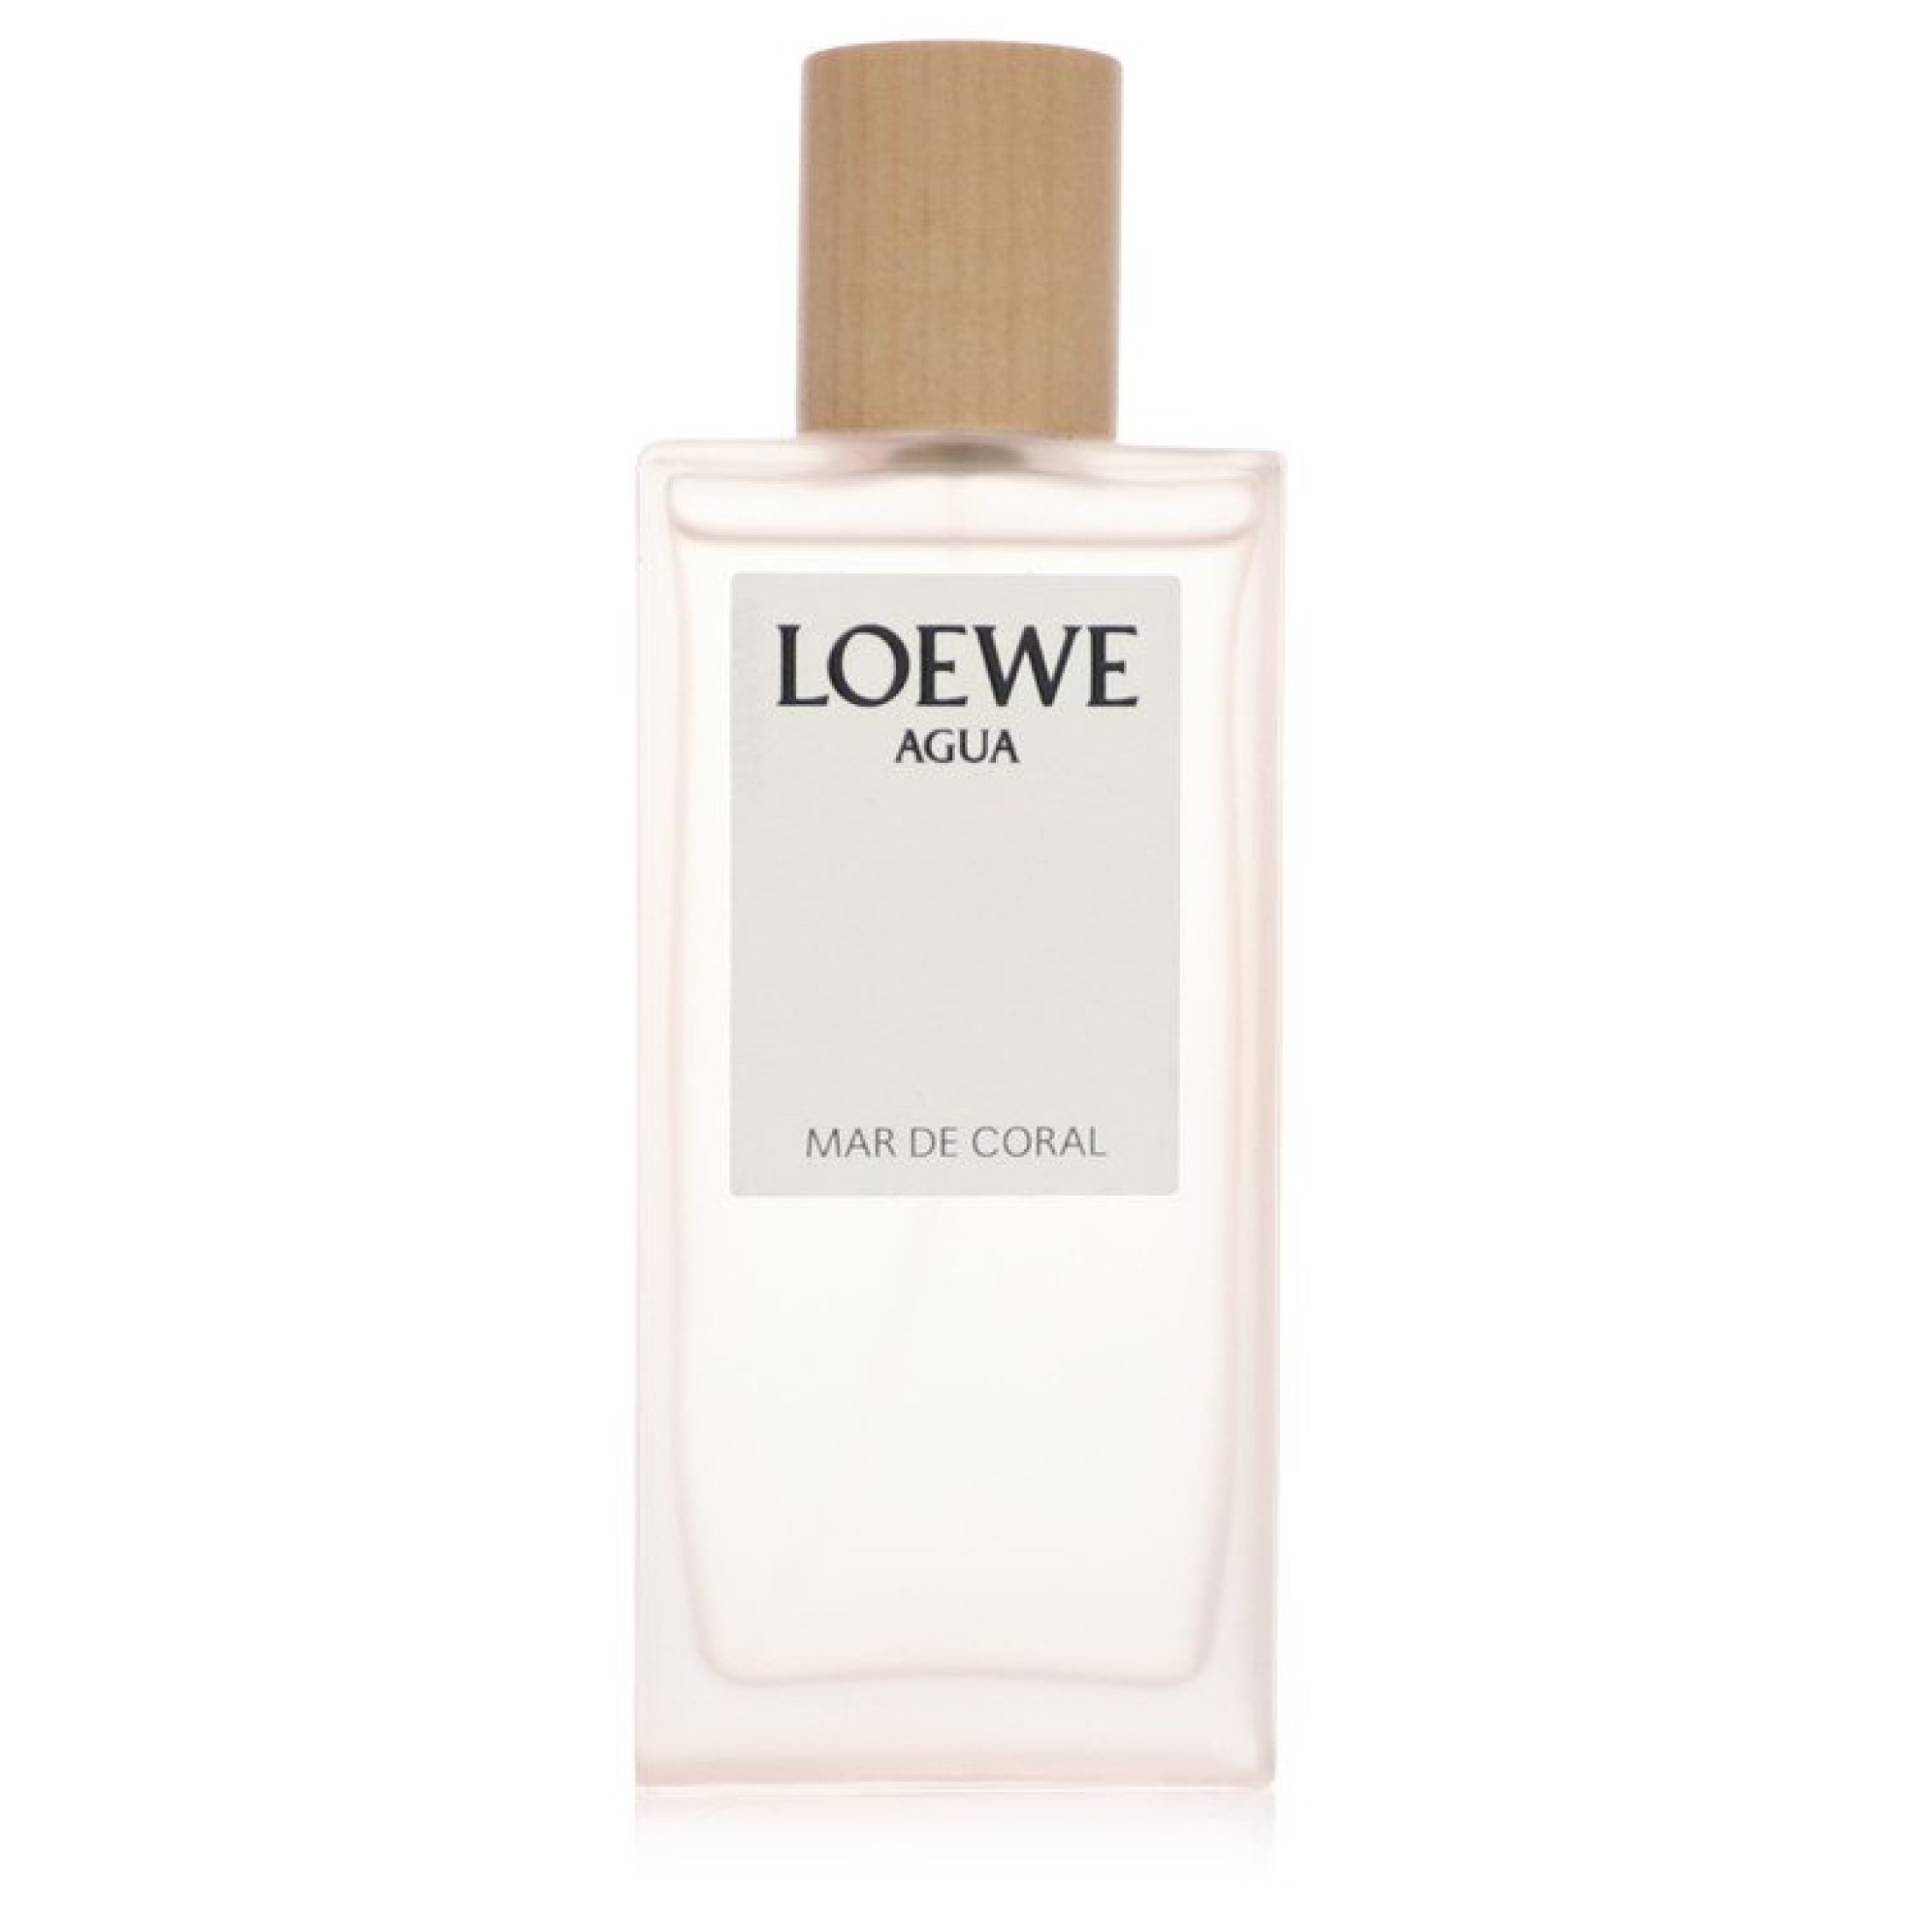 Loewe Agua De  Mar De Coral Eau De Toilette Spray (Unboxed) 101 ml von Loewe